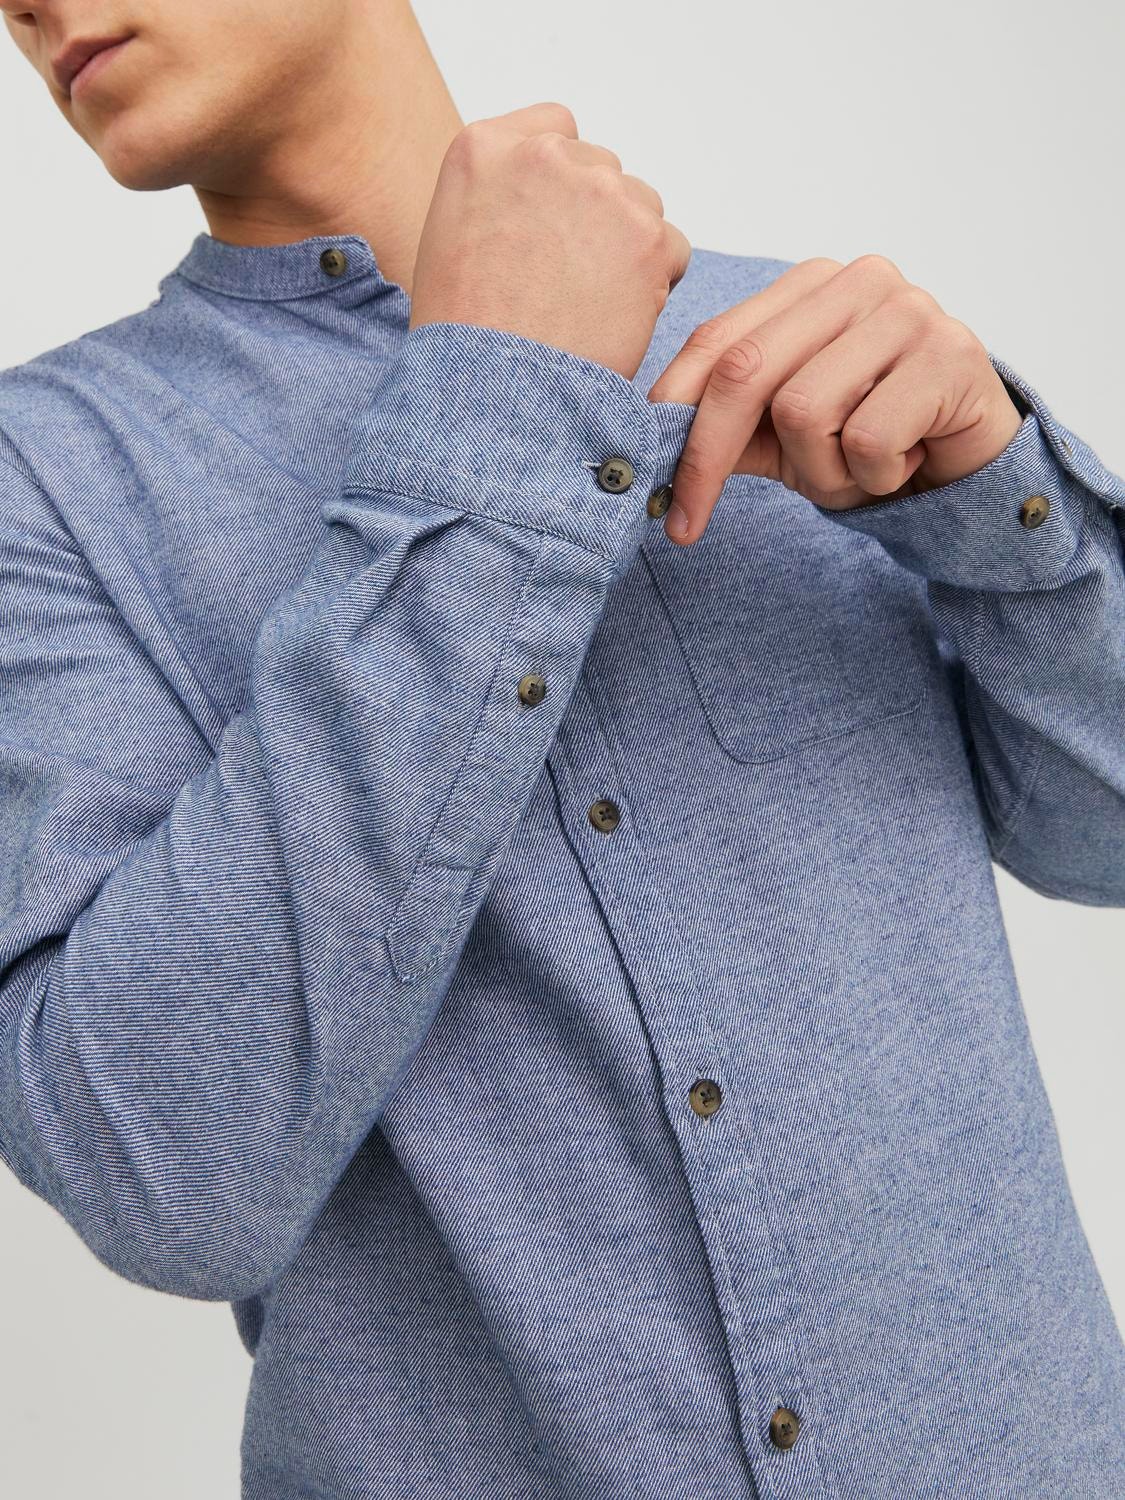 Jack & Jones Comfort Fit Casual skjorte -Faded Denim - 12235975